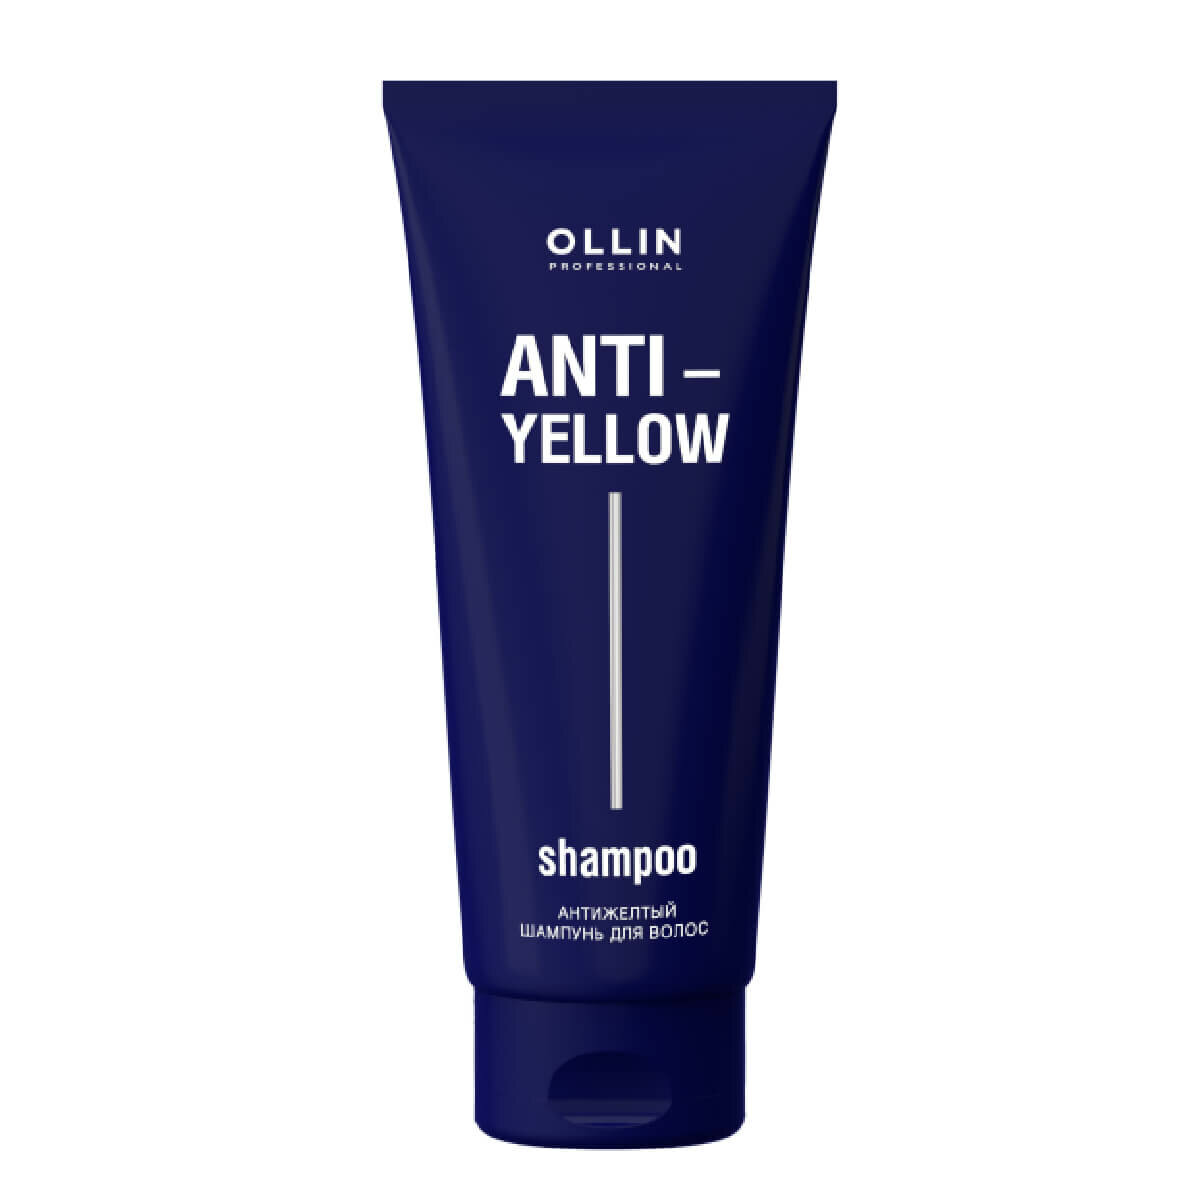 OLLIN Professional ANTI-YELLOW Антижелтый шампунь для волос 250мл, OLLIN